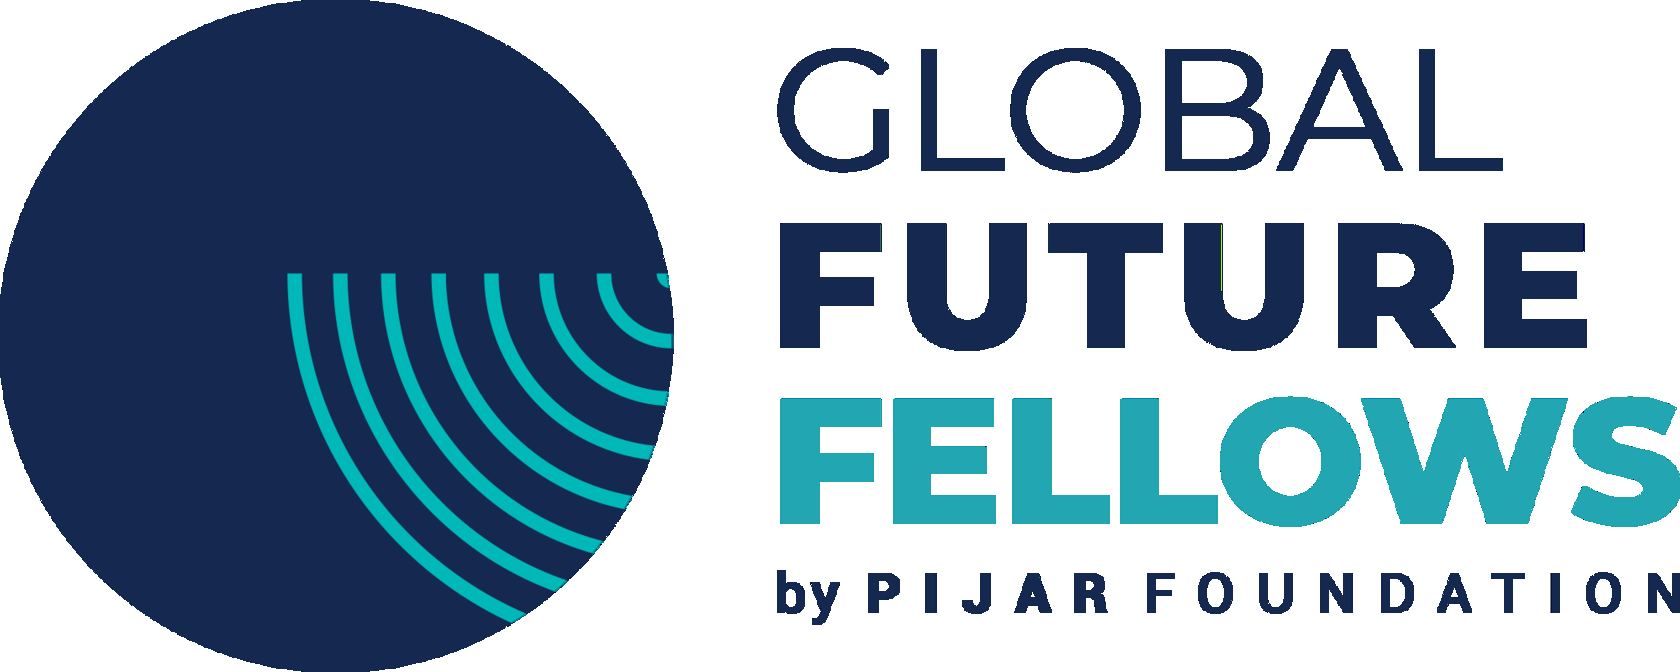 Global Future Fellows 2022